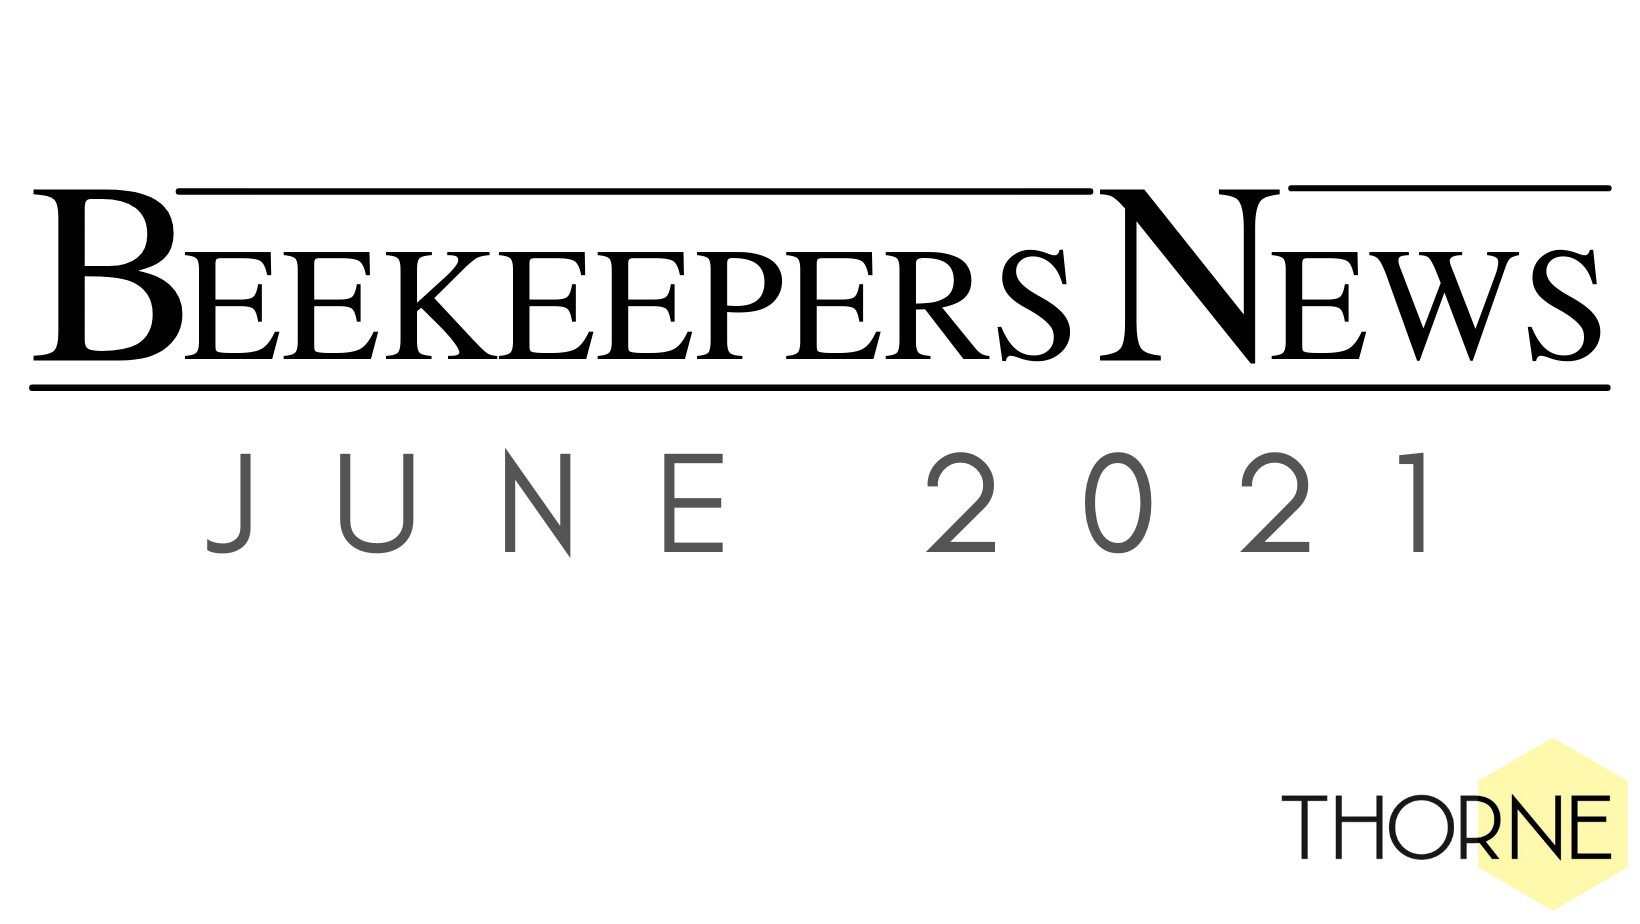 Beekeepers News - June 2021 - Issue 57